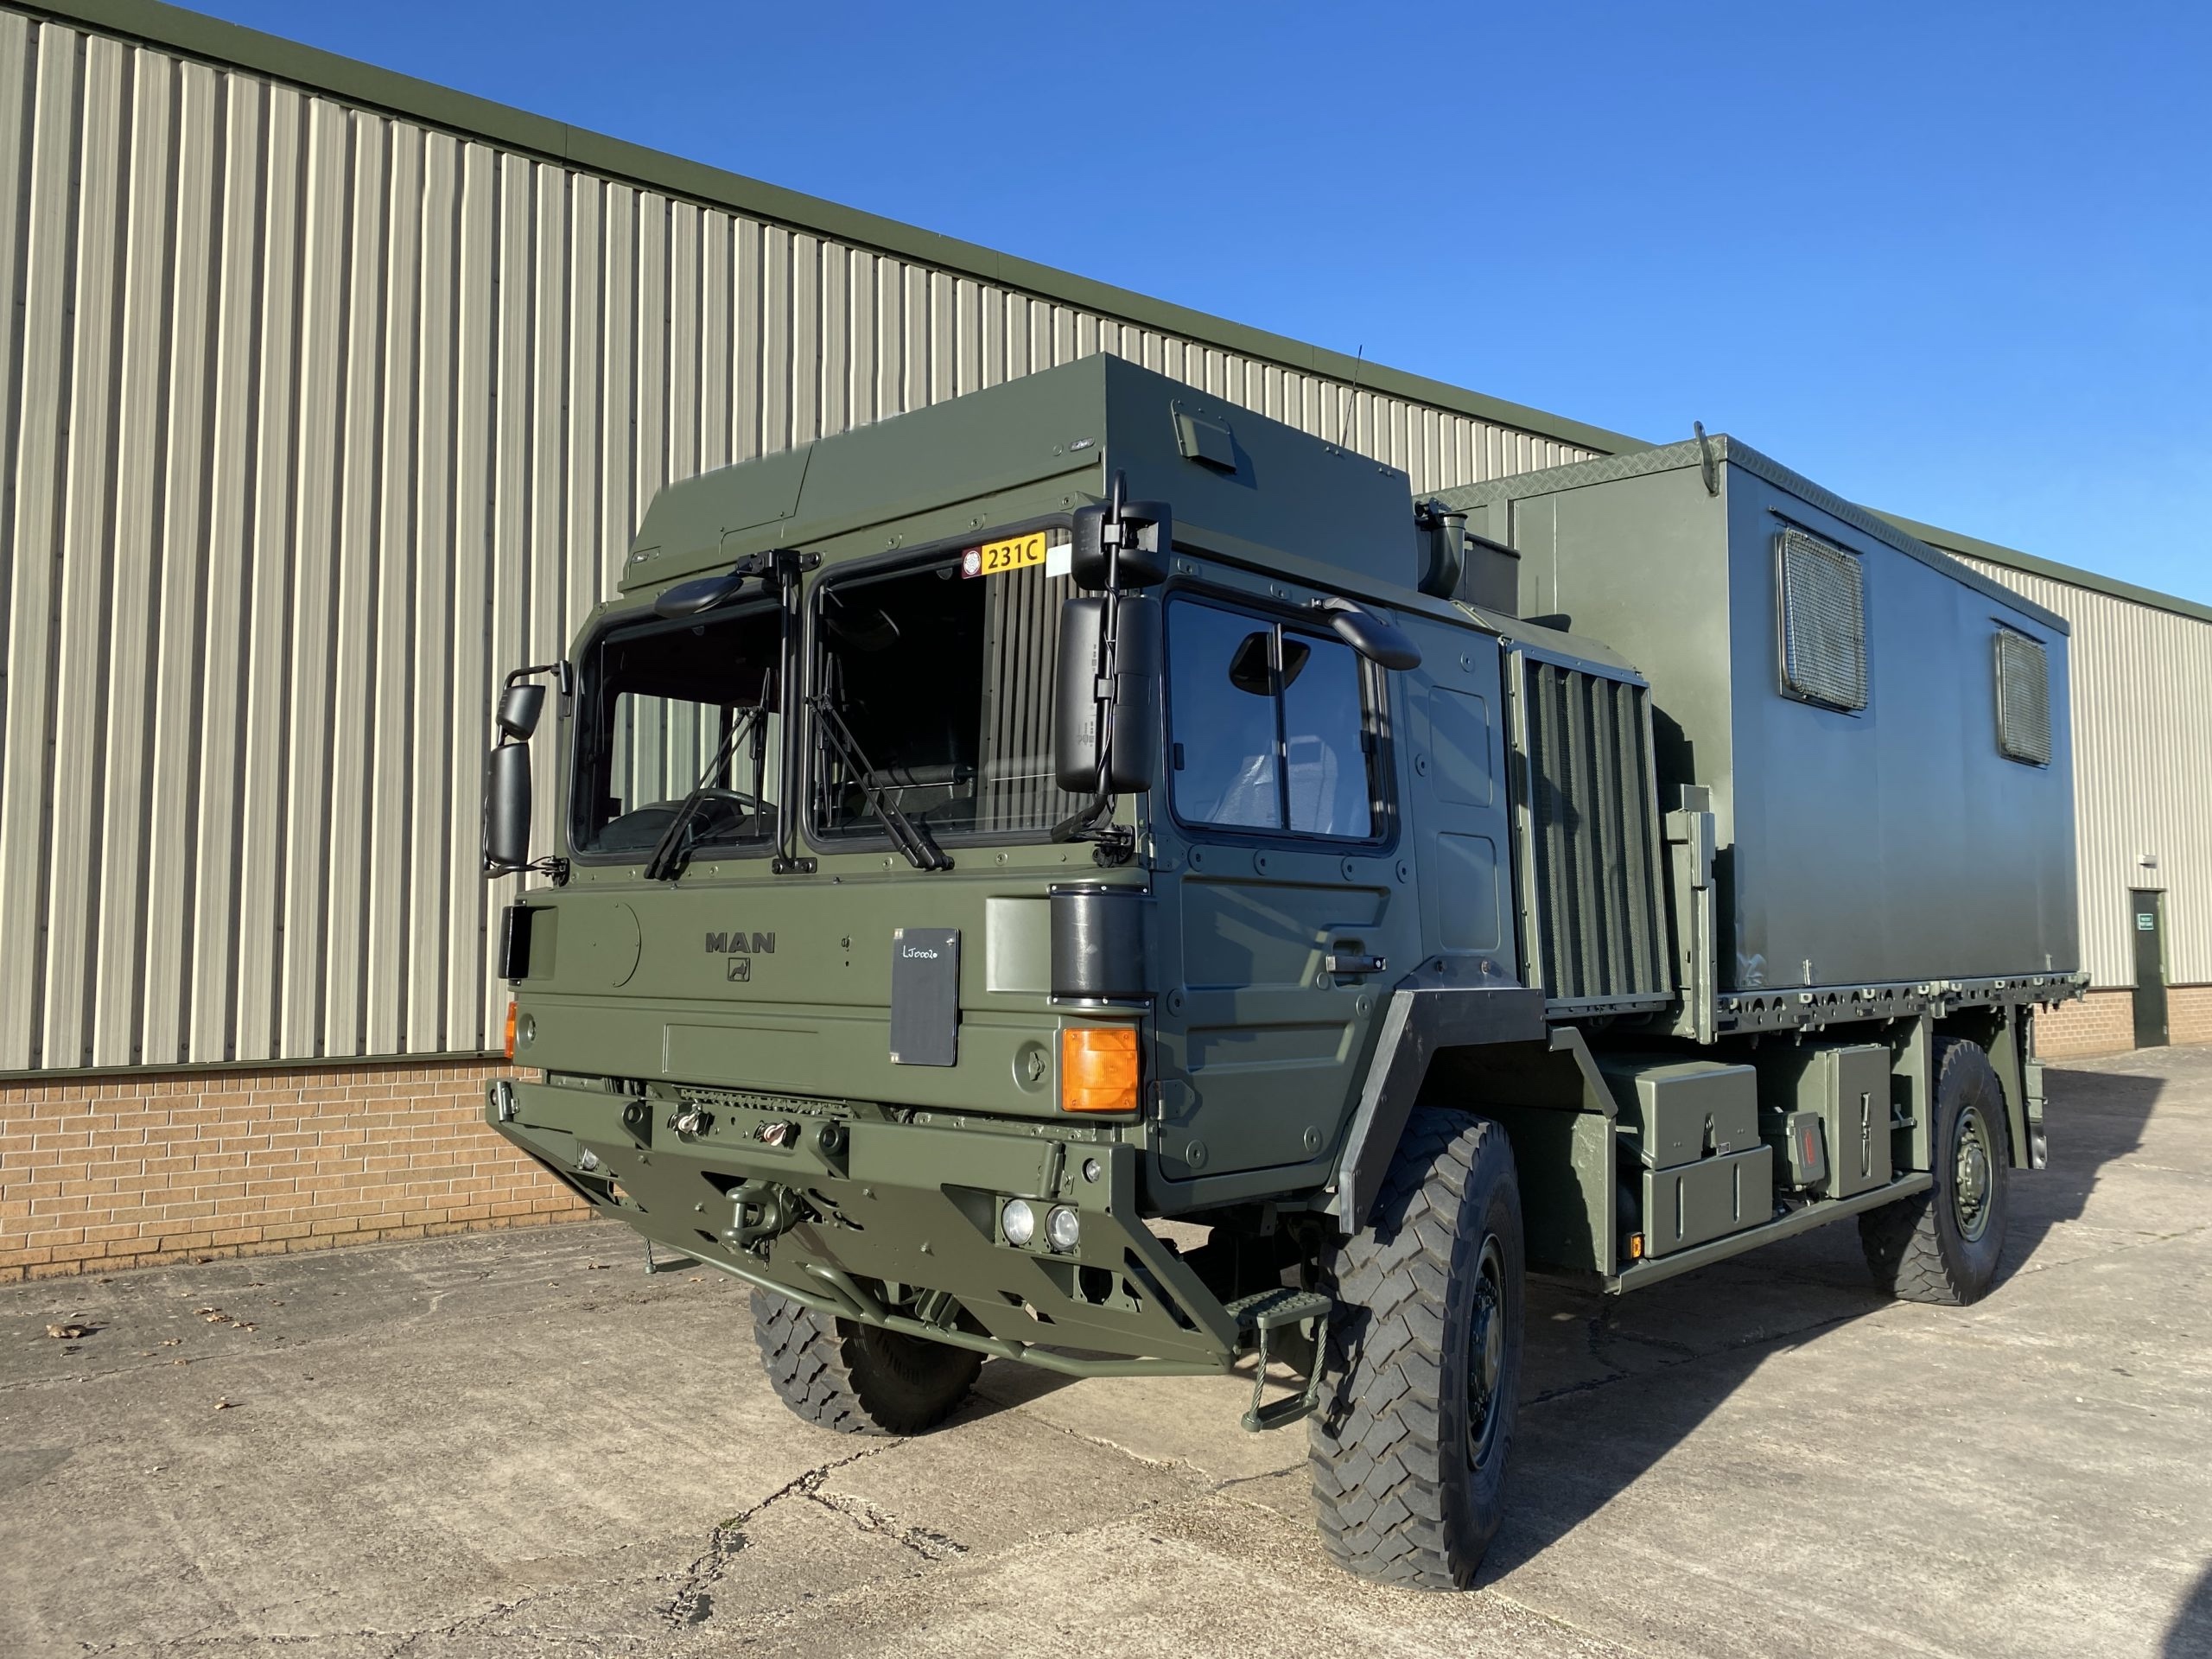 MAN HX60 18.330 Box Truck - ex military vehicles for sale, mod surplus